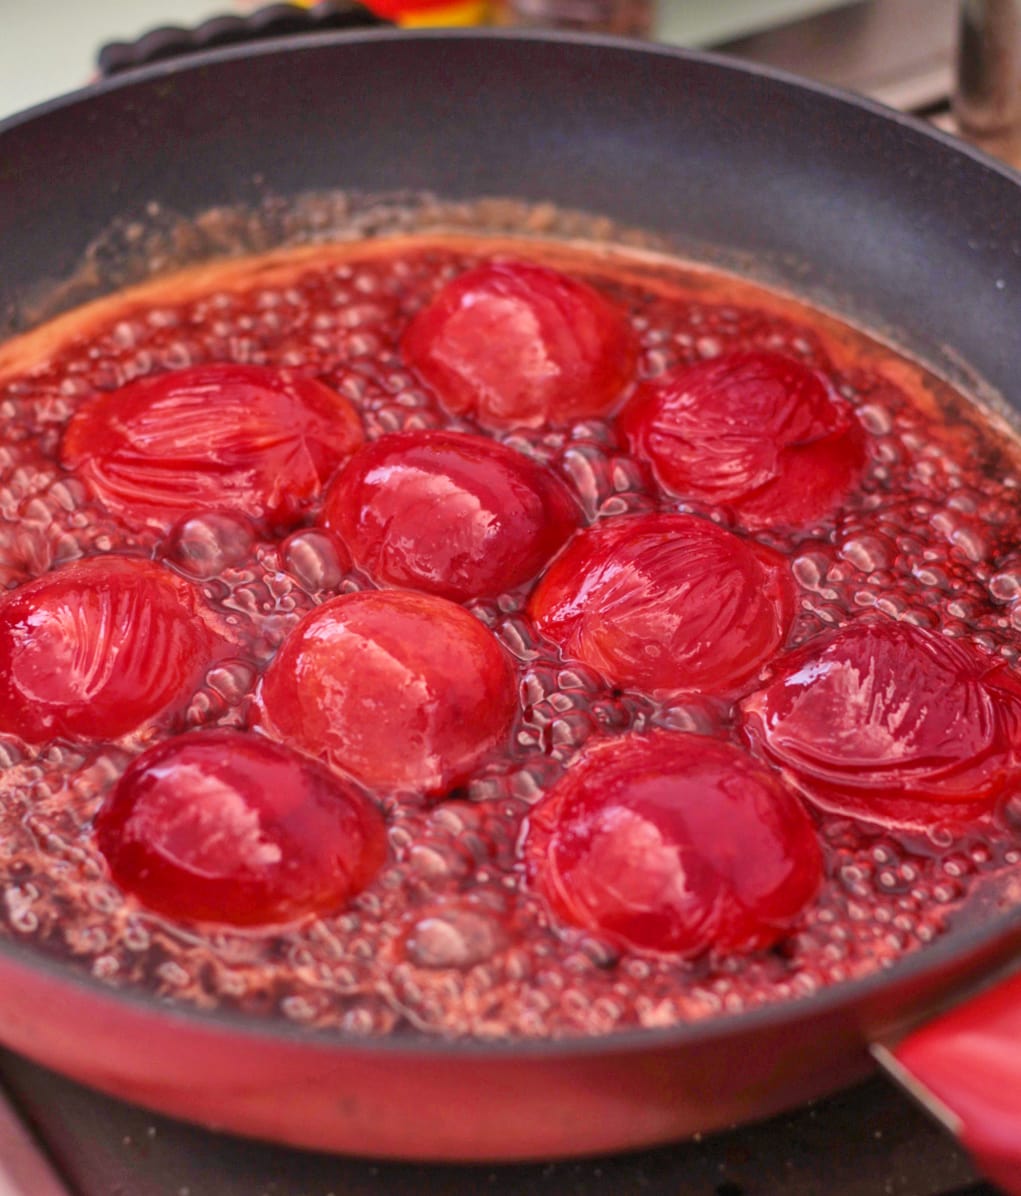 Plums caramelising in a pan.